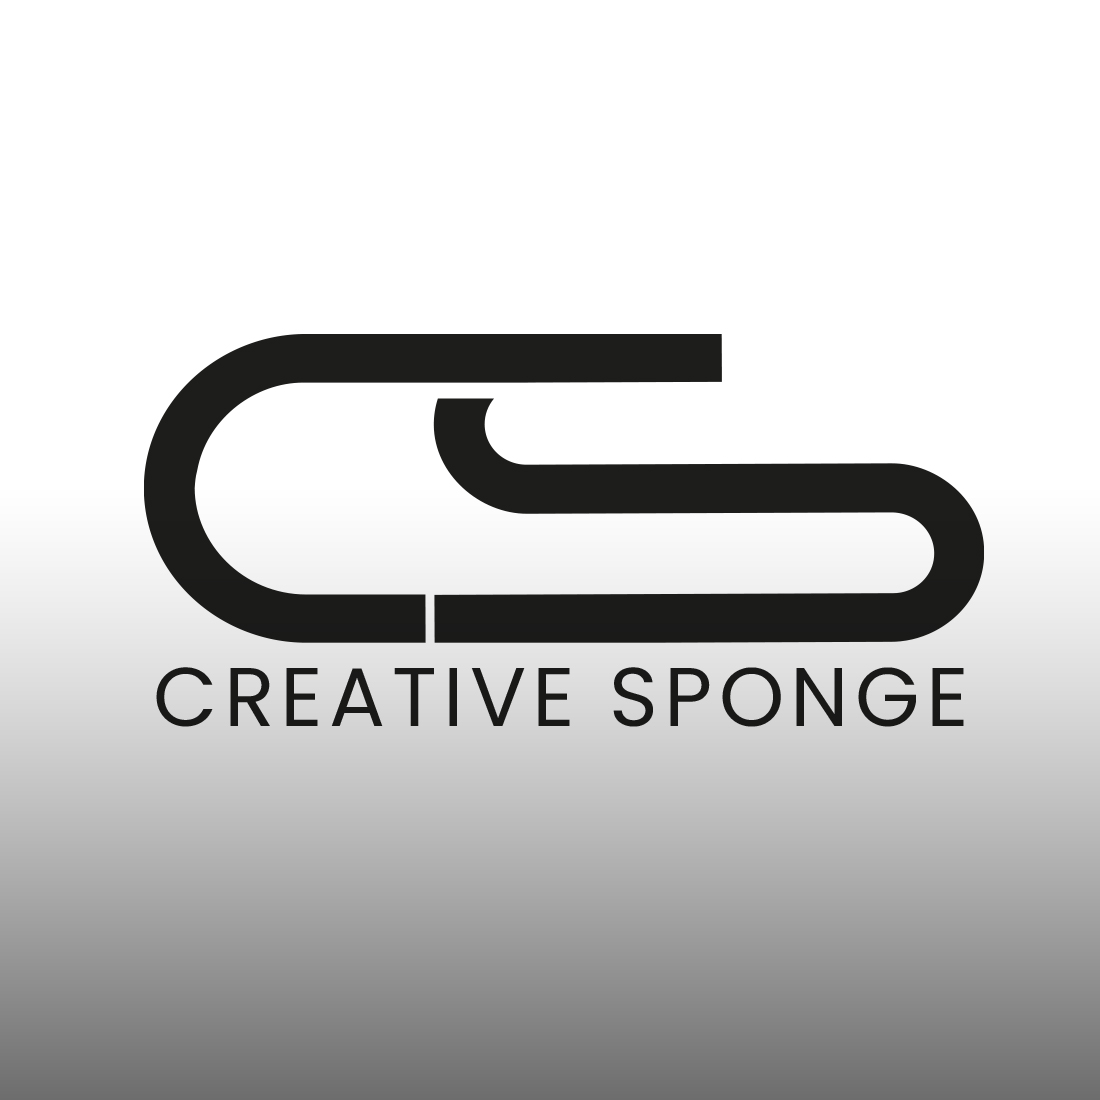 36 digital marketing logo ideas that rank first - 99designs | Marketing logo,  Startup logo, Marketing logo design